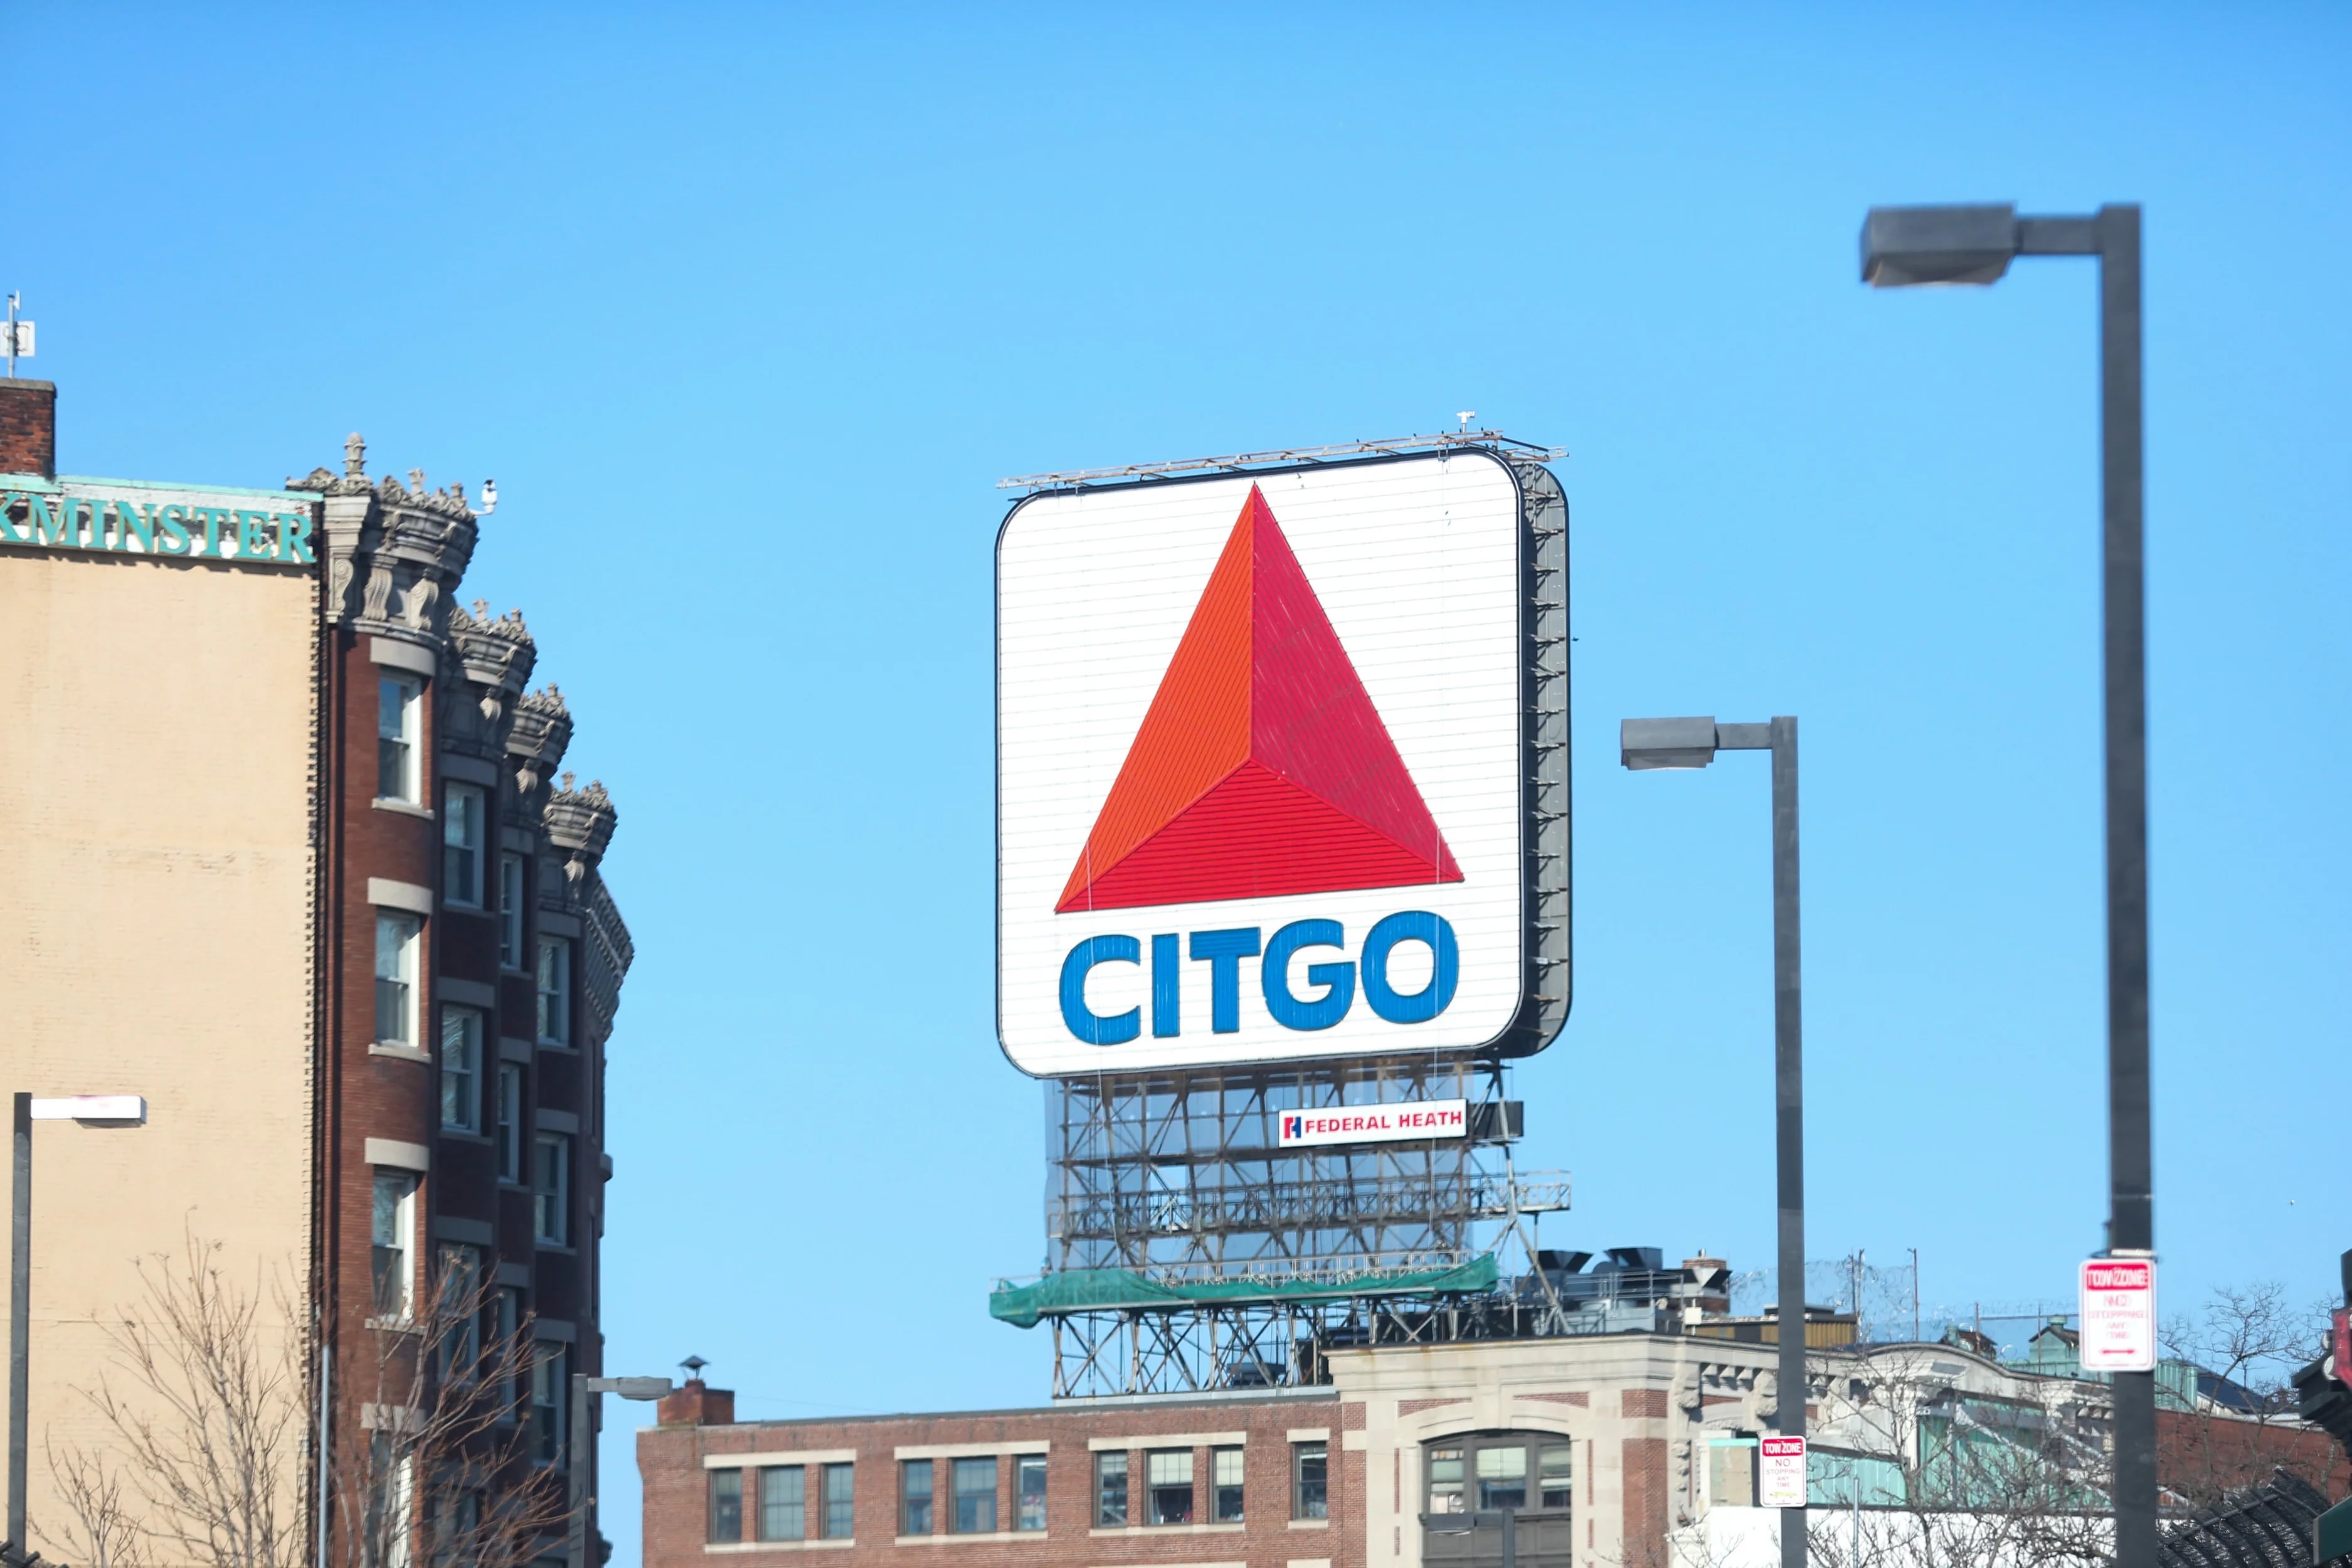 Un cartel de Citgo en Boston

